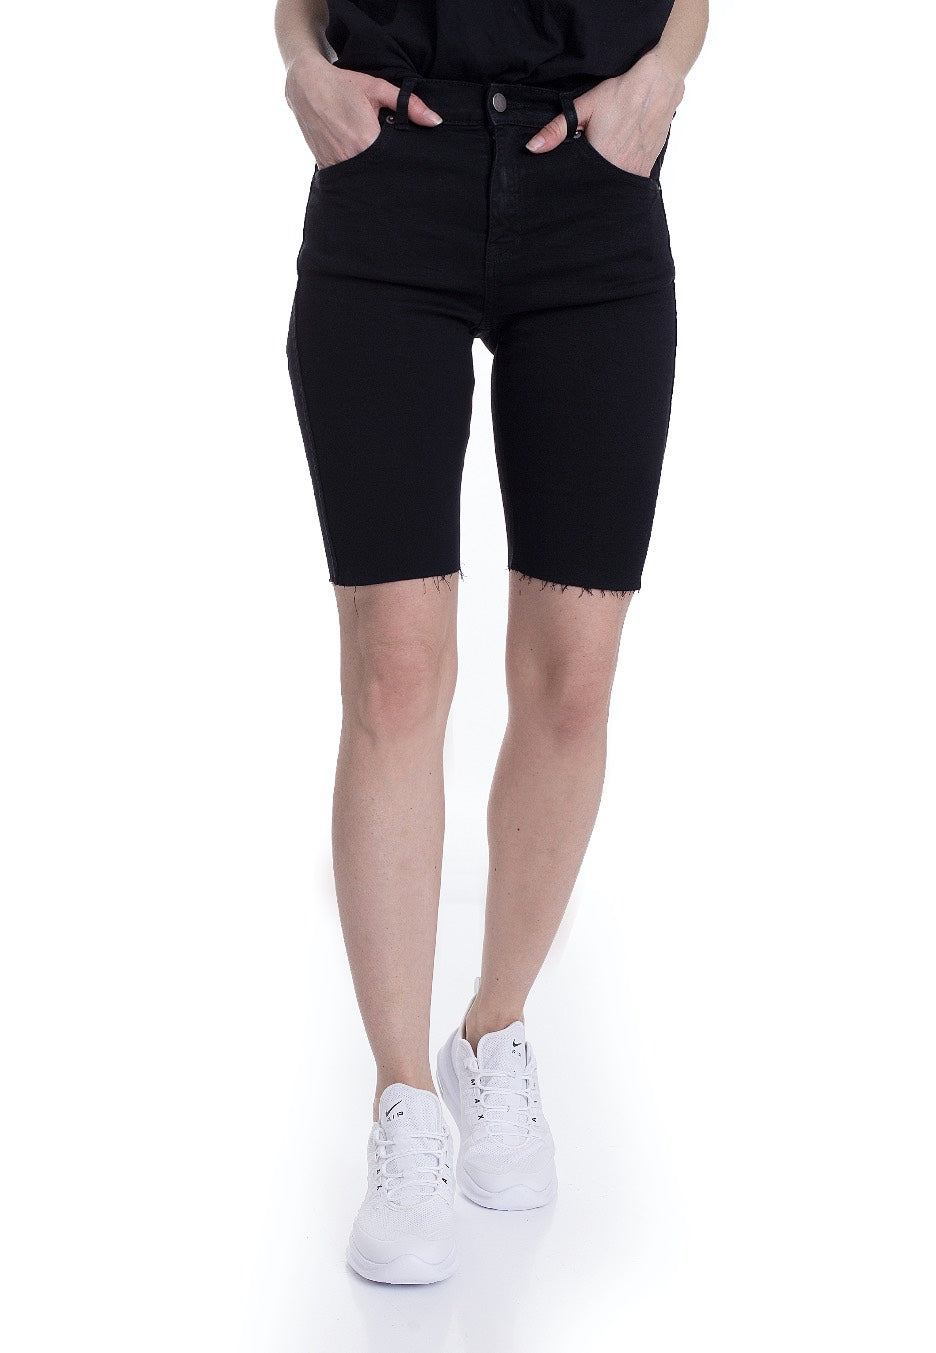 Dr. Denim - Lexy Bicycle - Shorts | Women-Image